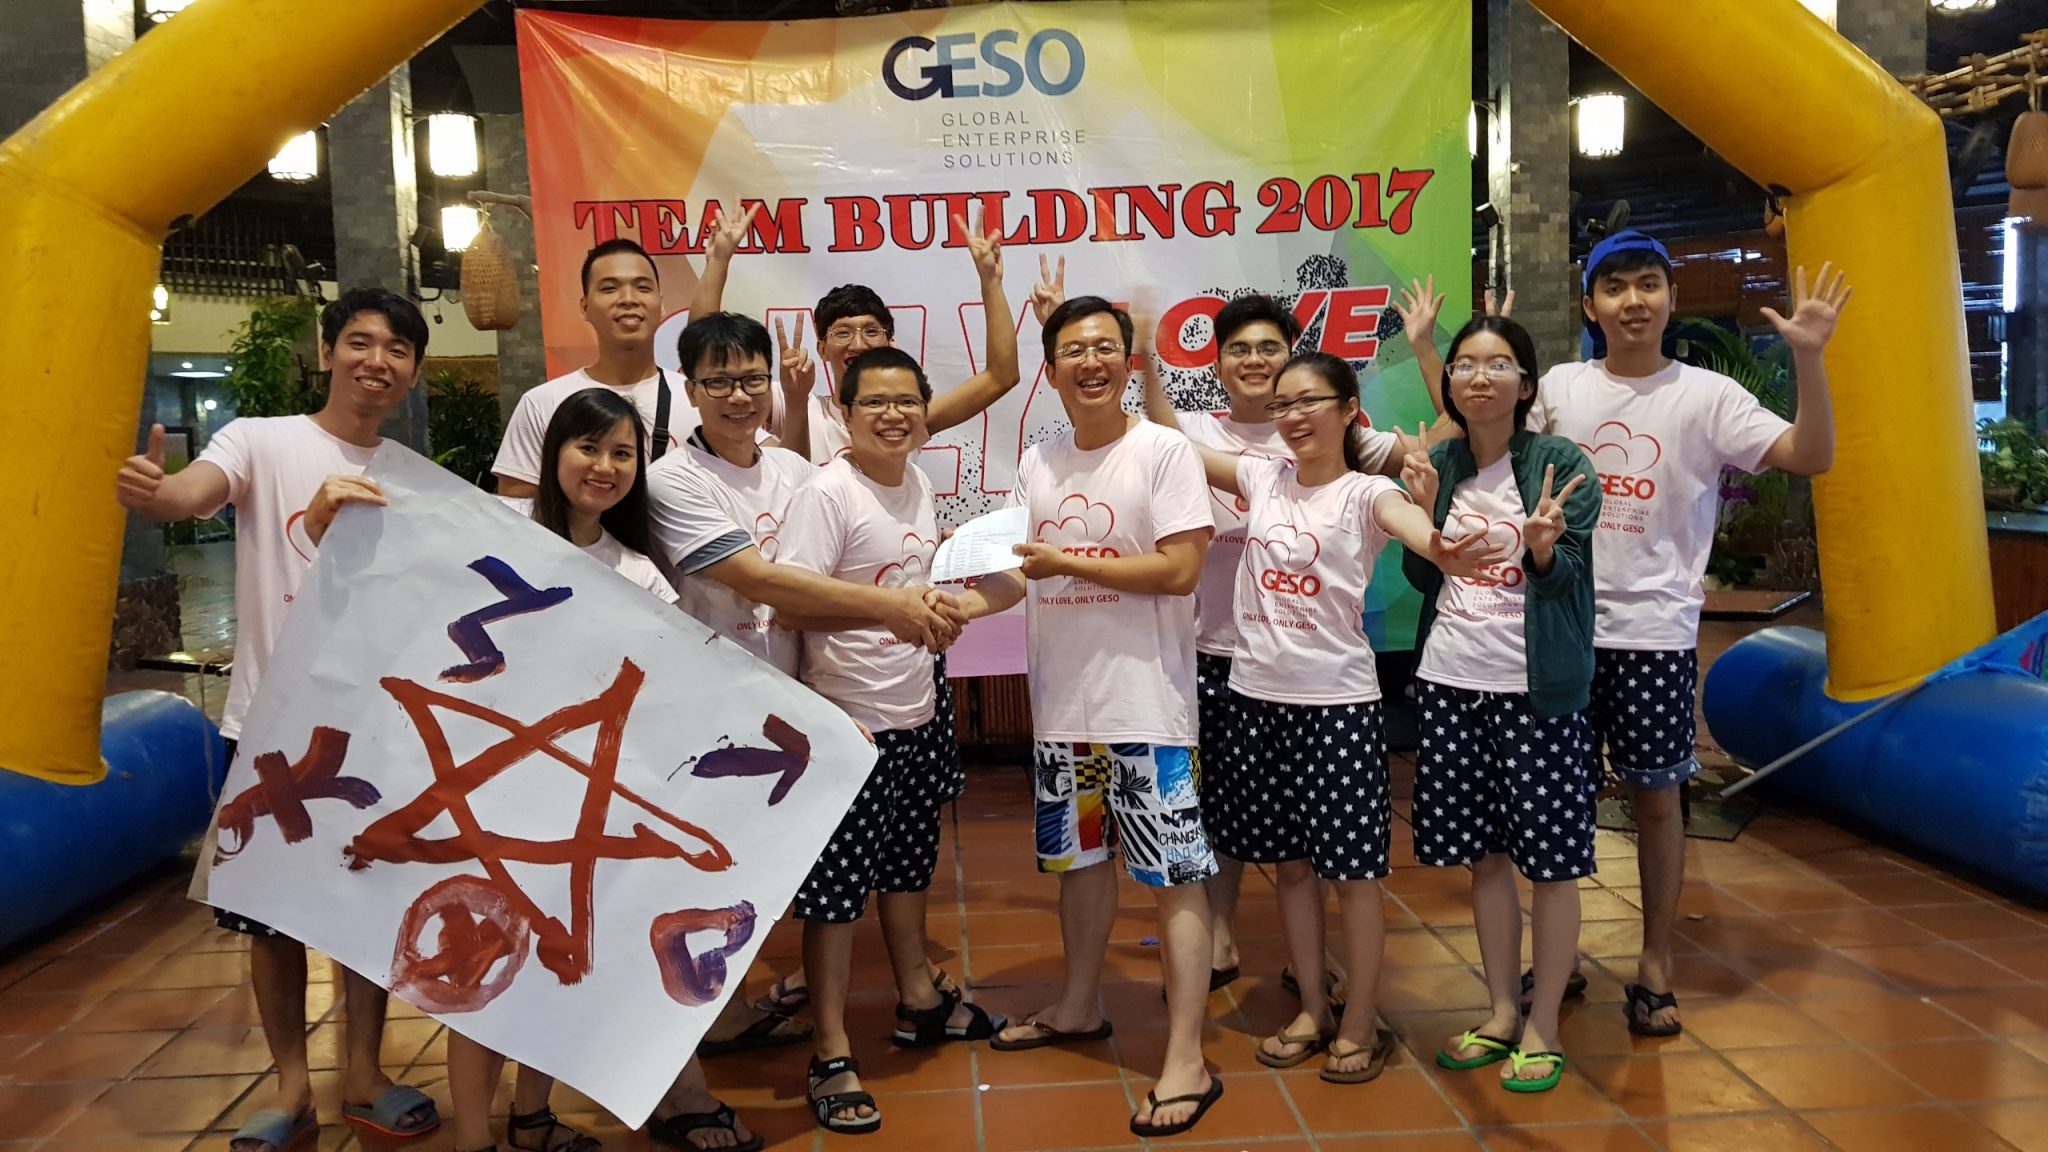 Áo thun team building - Công ty Geso - geso13